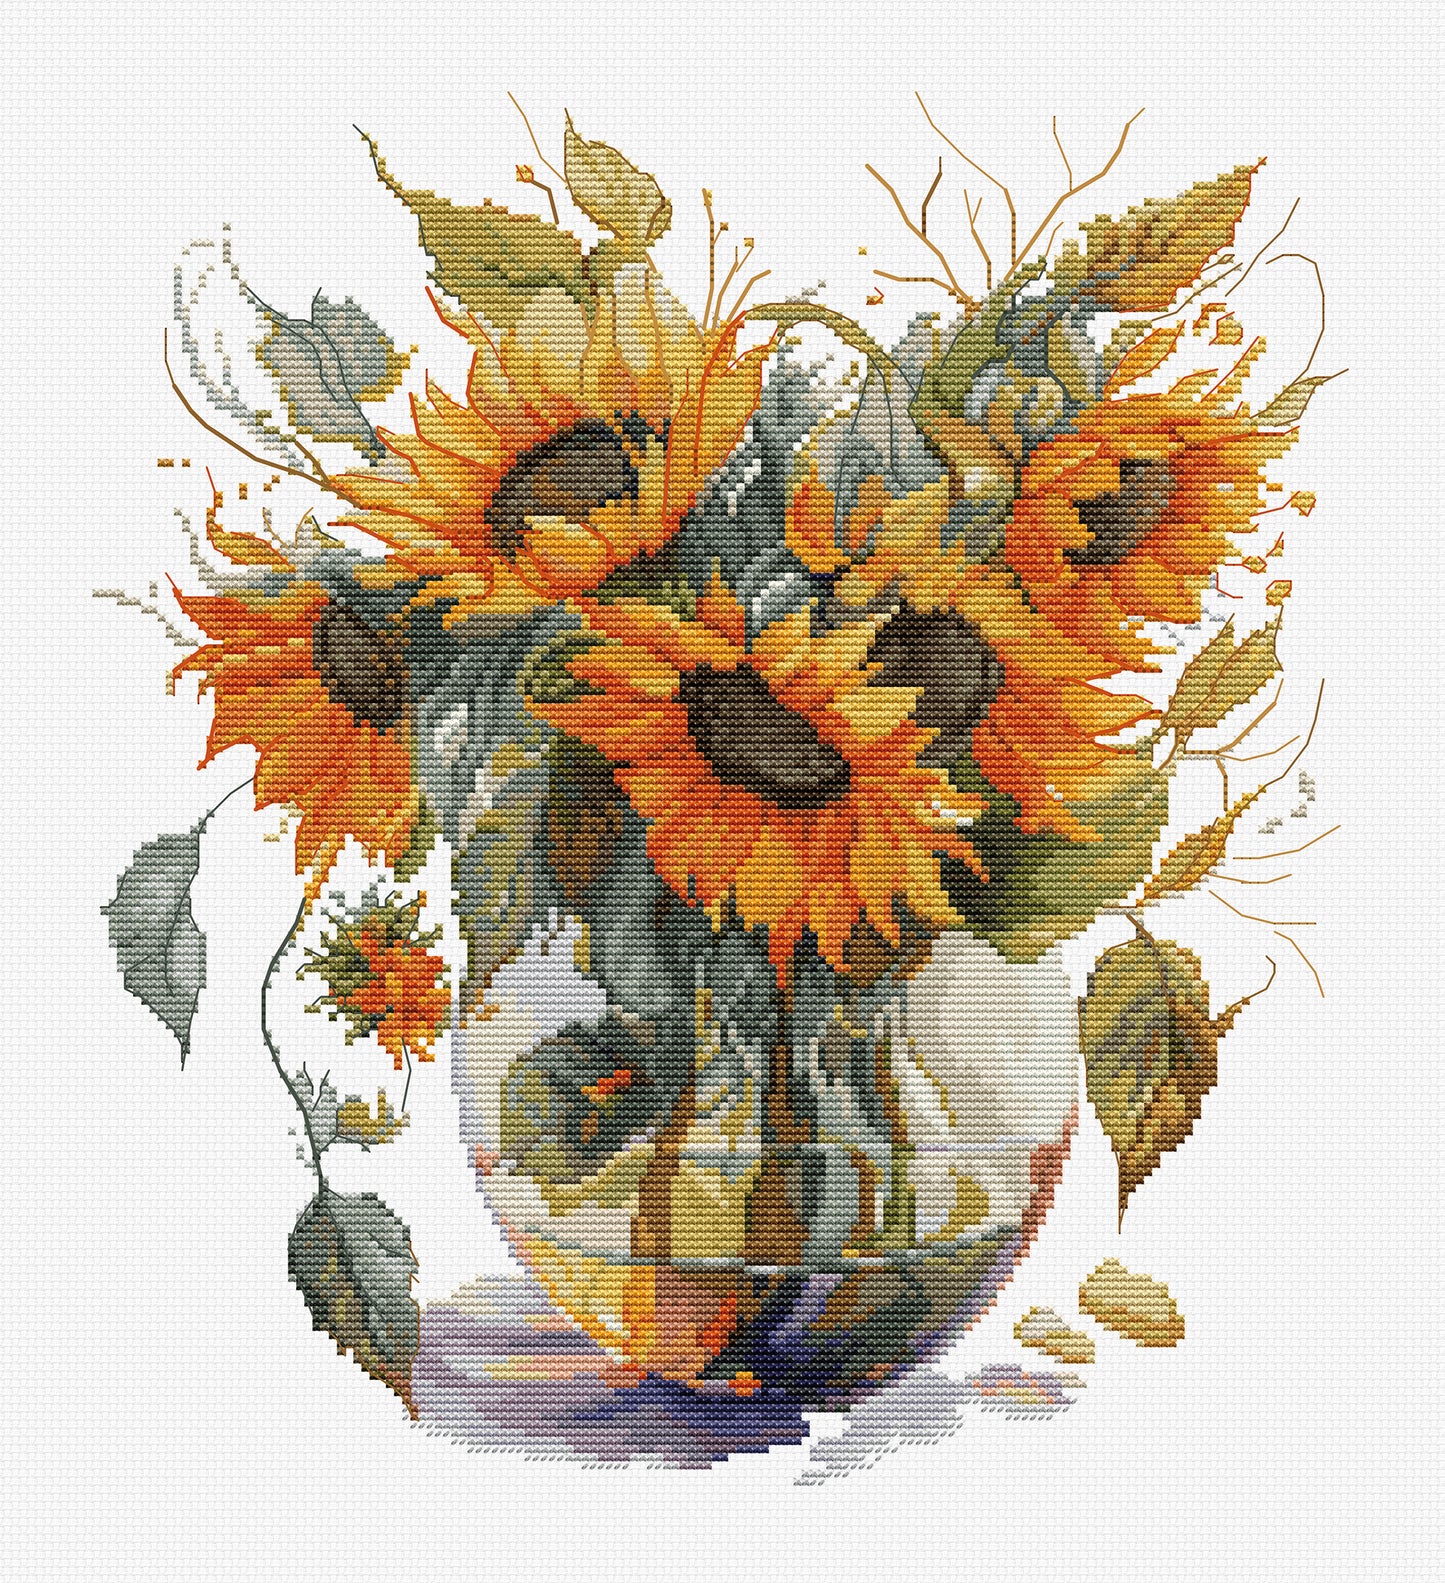 Cross Stitch Kit Luca-S - Vase with Sunflower, B7025